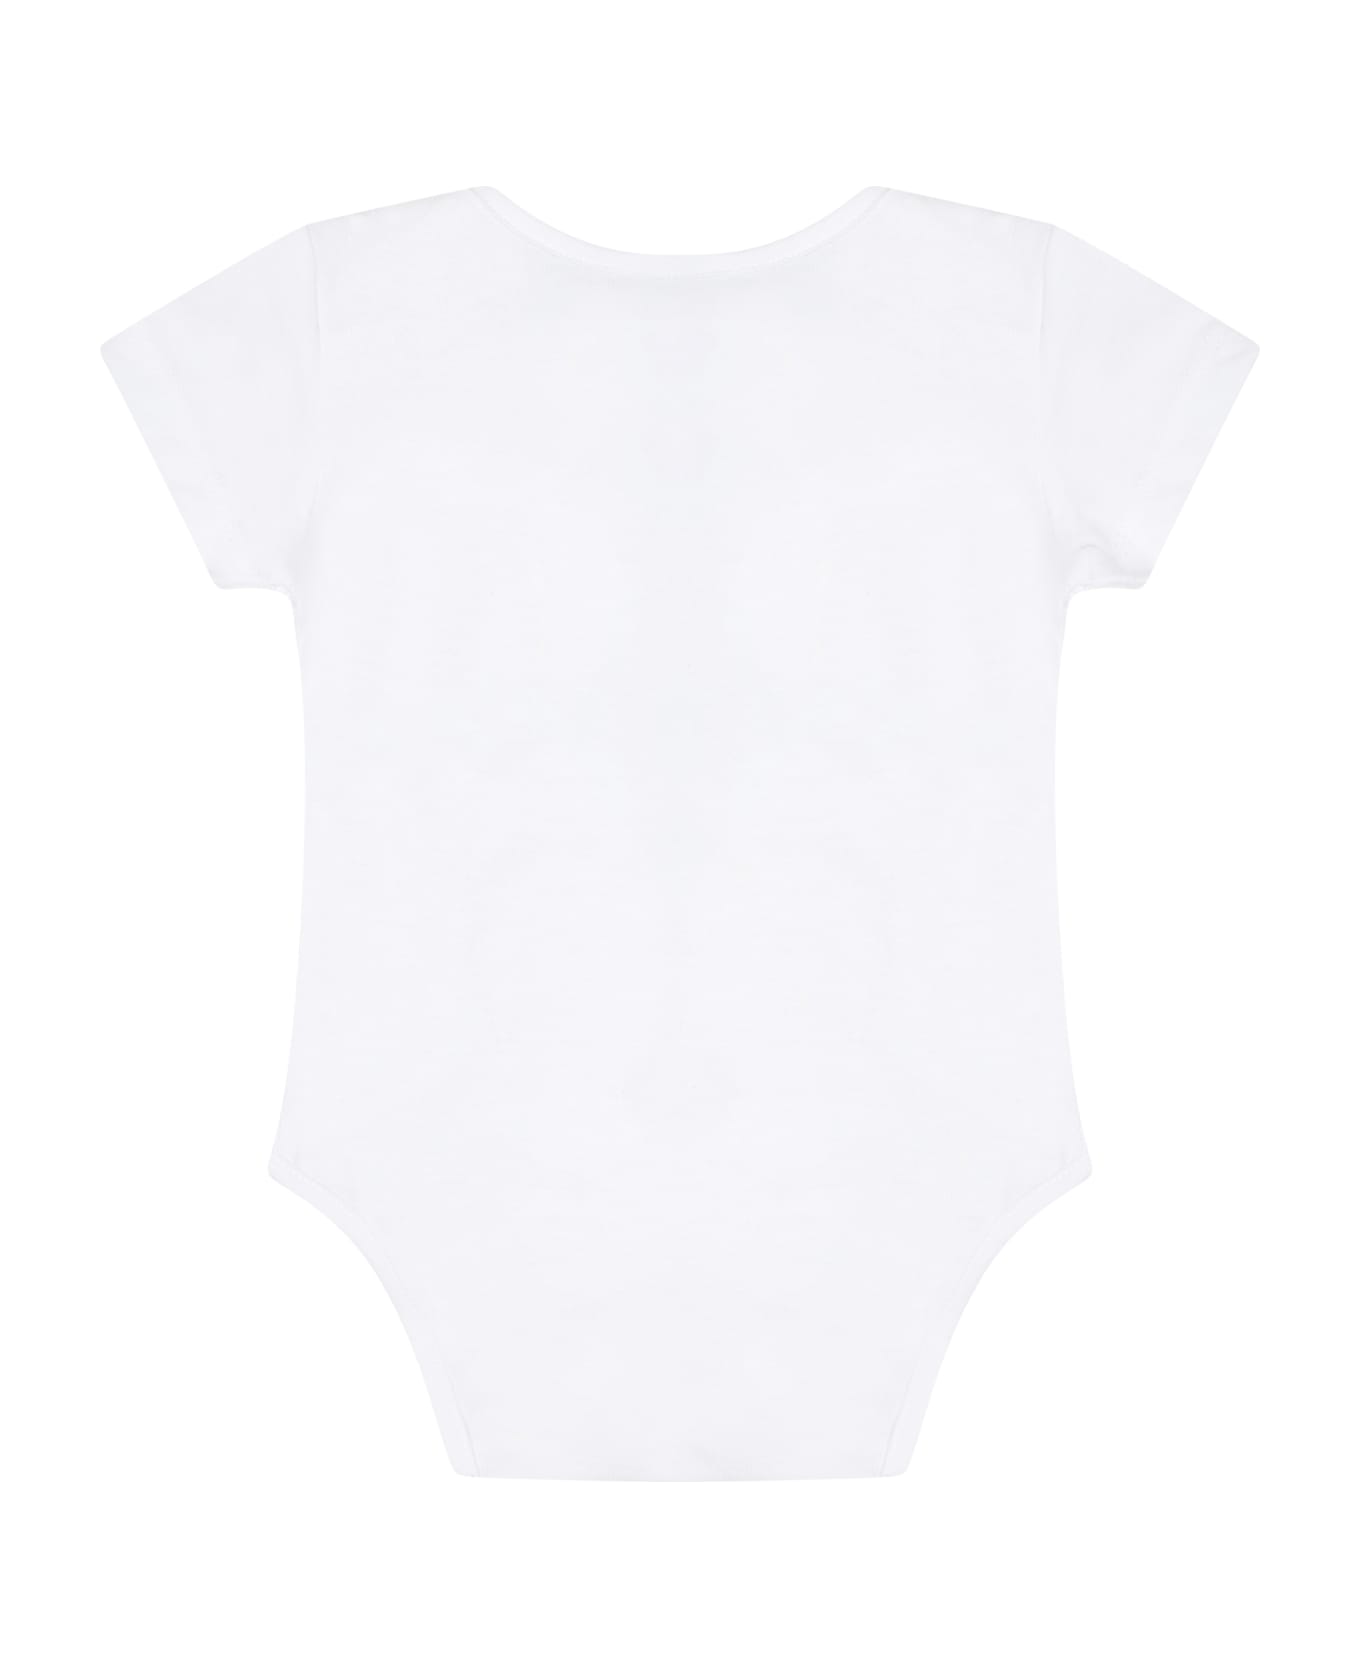 Moschino White Body For Baby Kids With Logo - White